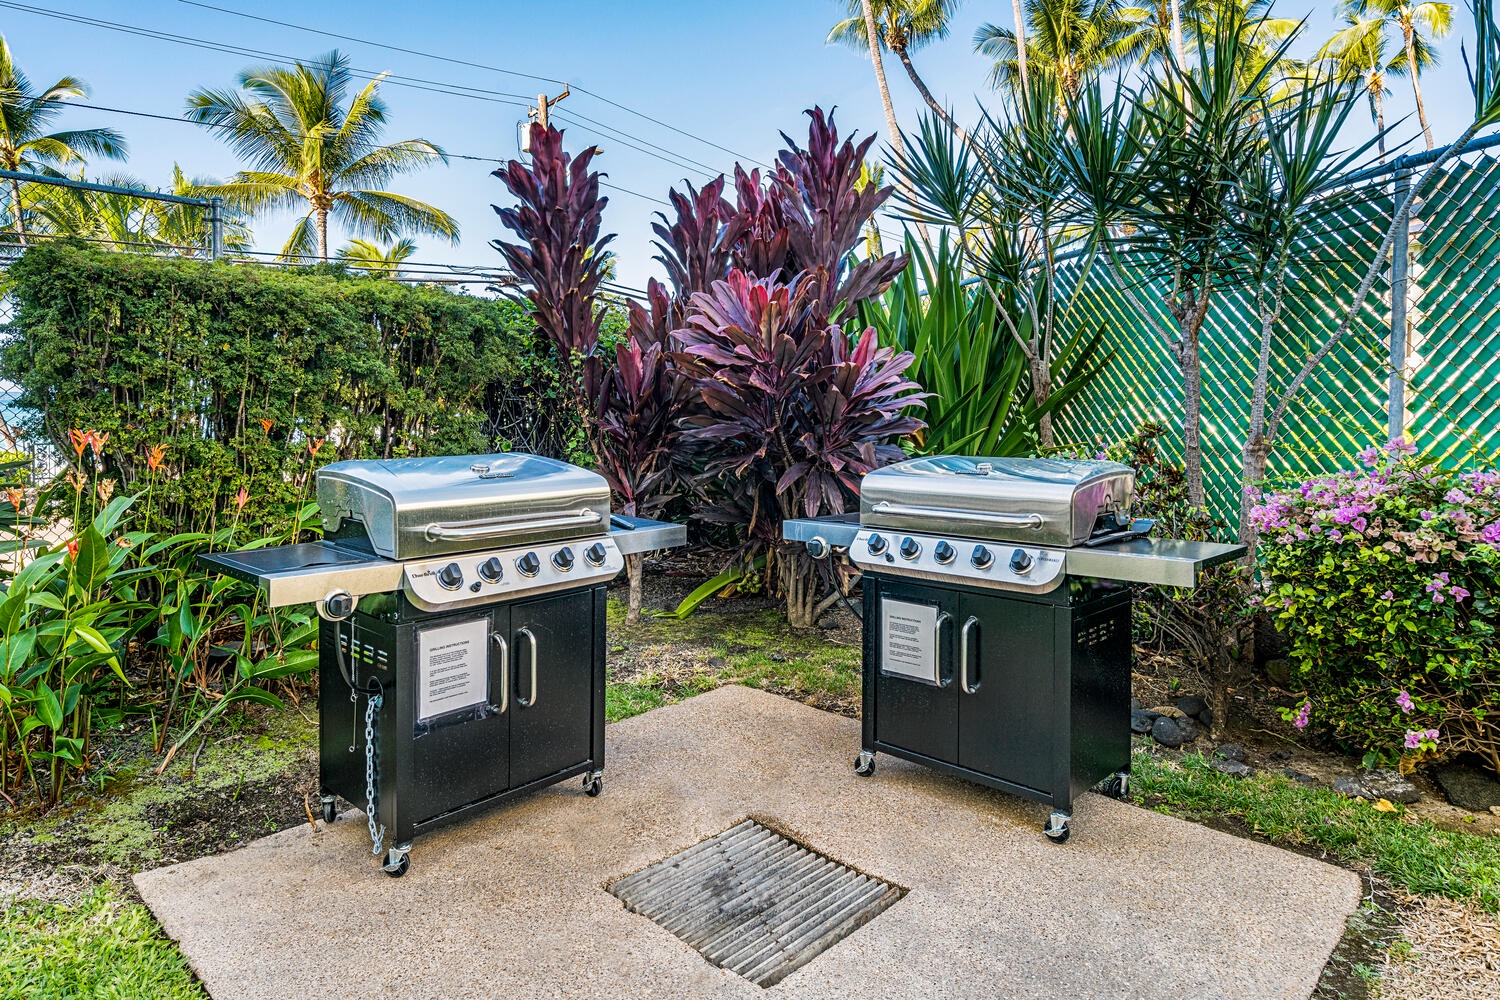 Kailua Kona Vacation Rentals, Kona Alii 302 - BBQ grills conveniently located near the pool.